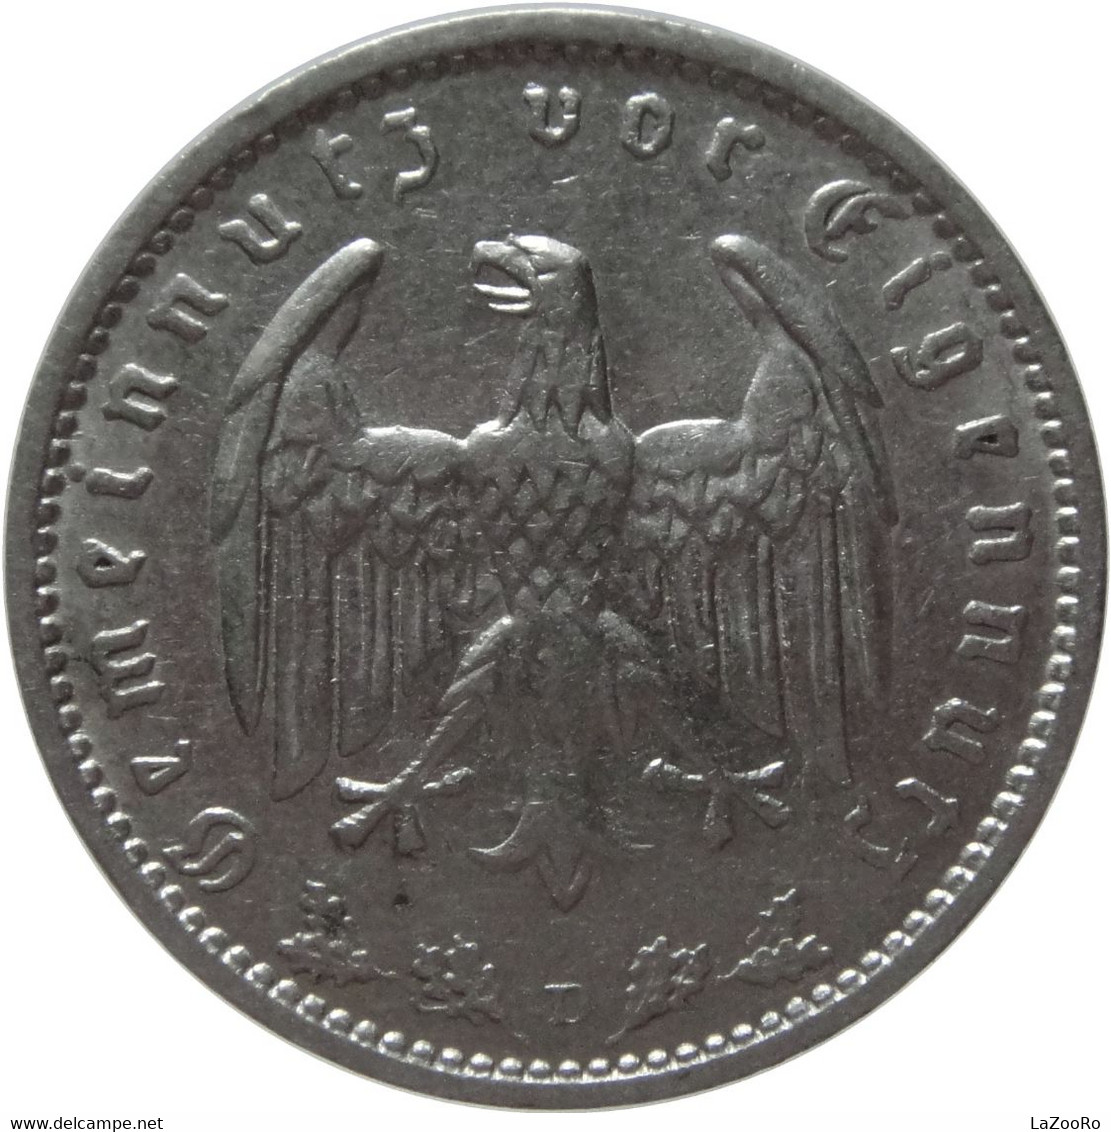 LaZooRo: Germany 1 Mark 1936 D UNC - 1 Reichsmark